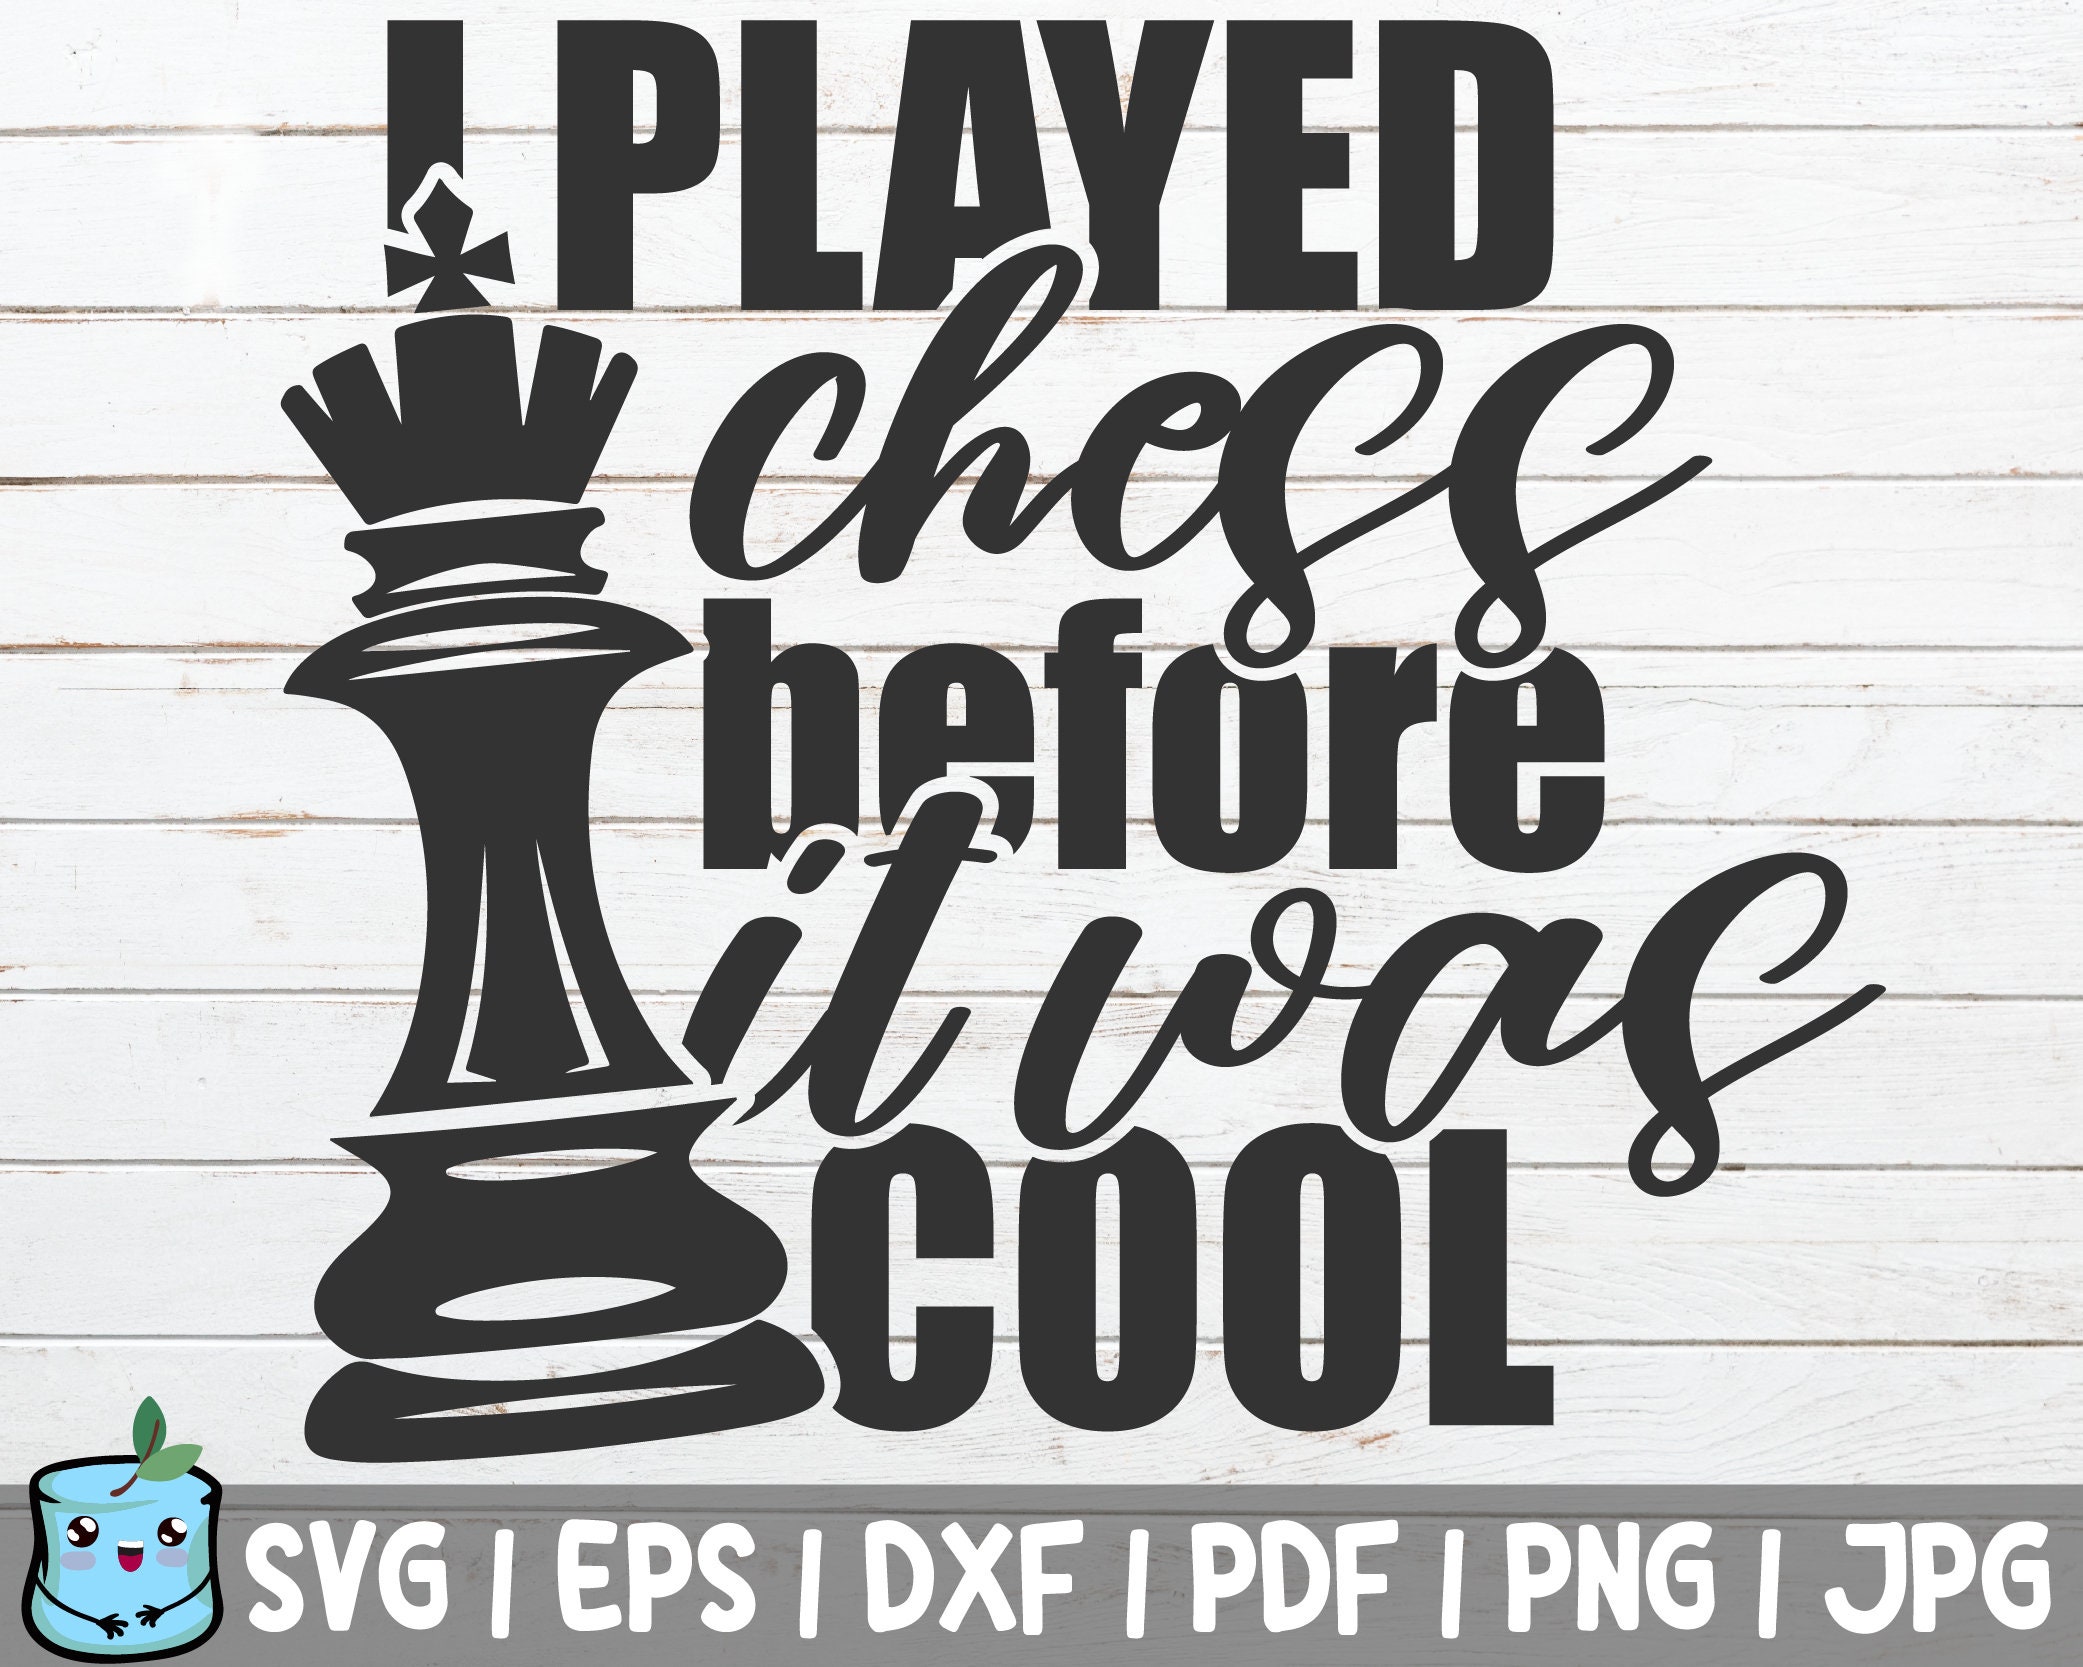 Think Retro Svg, Vintage Chess Pieces Player Chess Coach Svg, Vintage Chess  Pieces Svg - Buy t-shirt designs